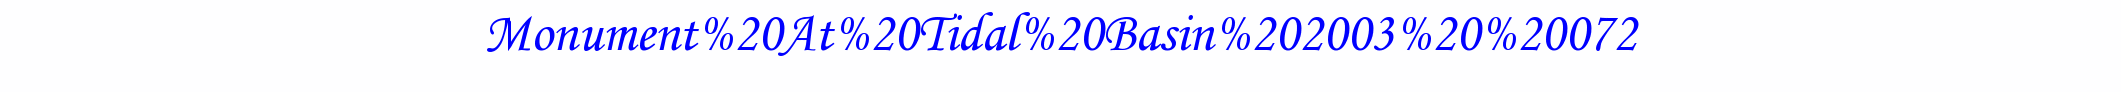 Monument%20At%20Tidal%20Basin%202003%20%20072